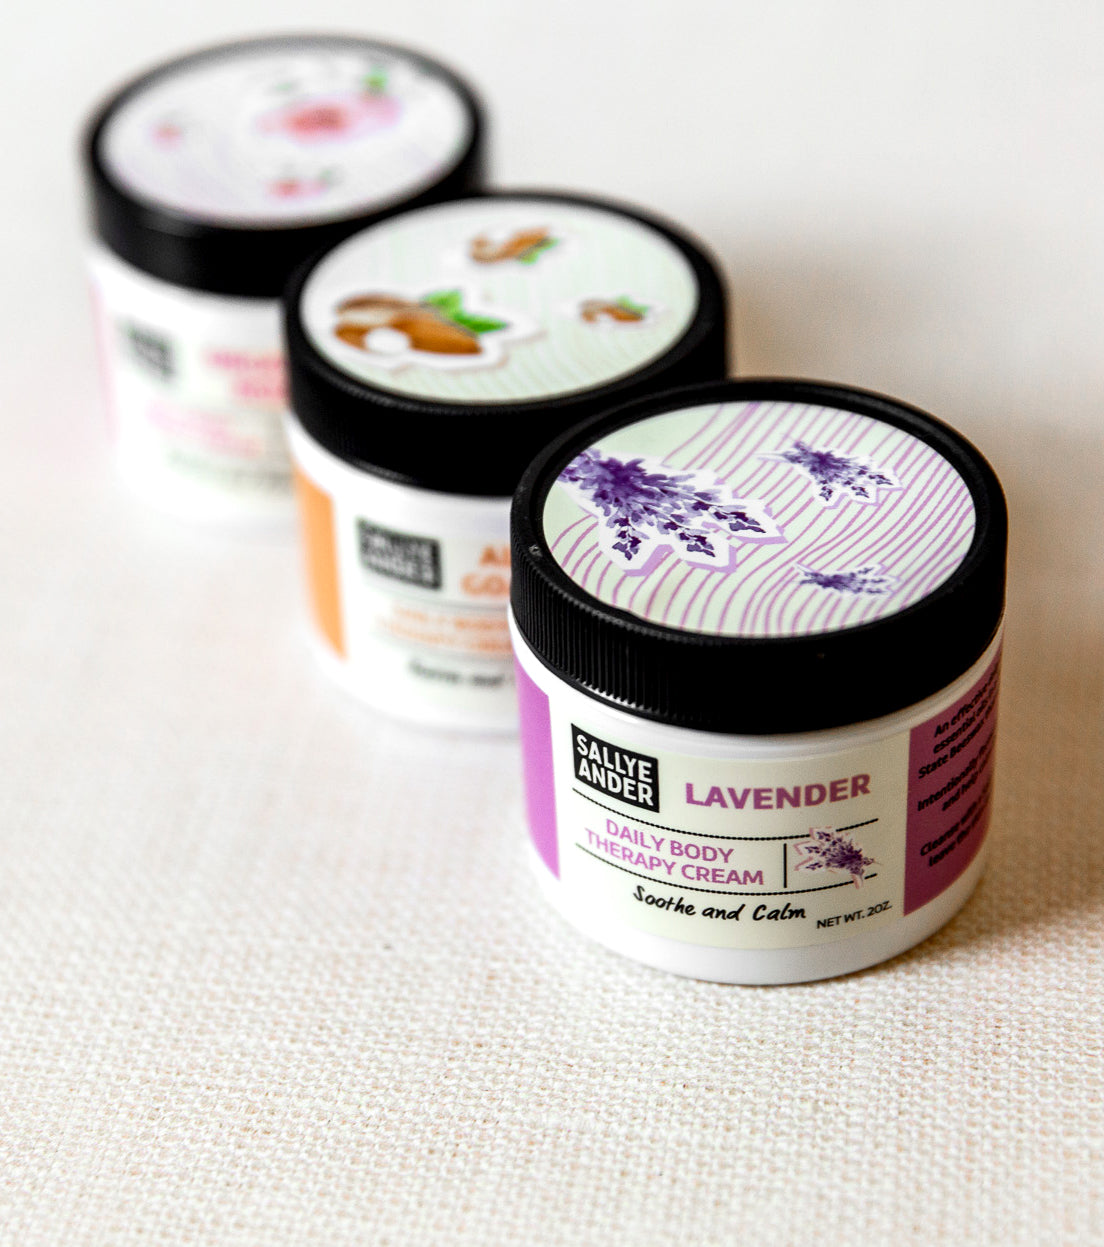 Lavender Daily Body Therapy Cream